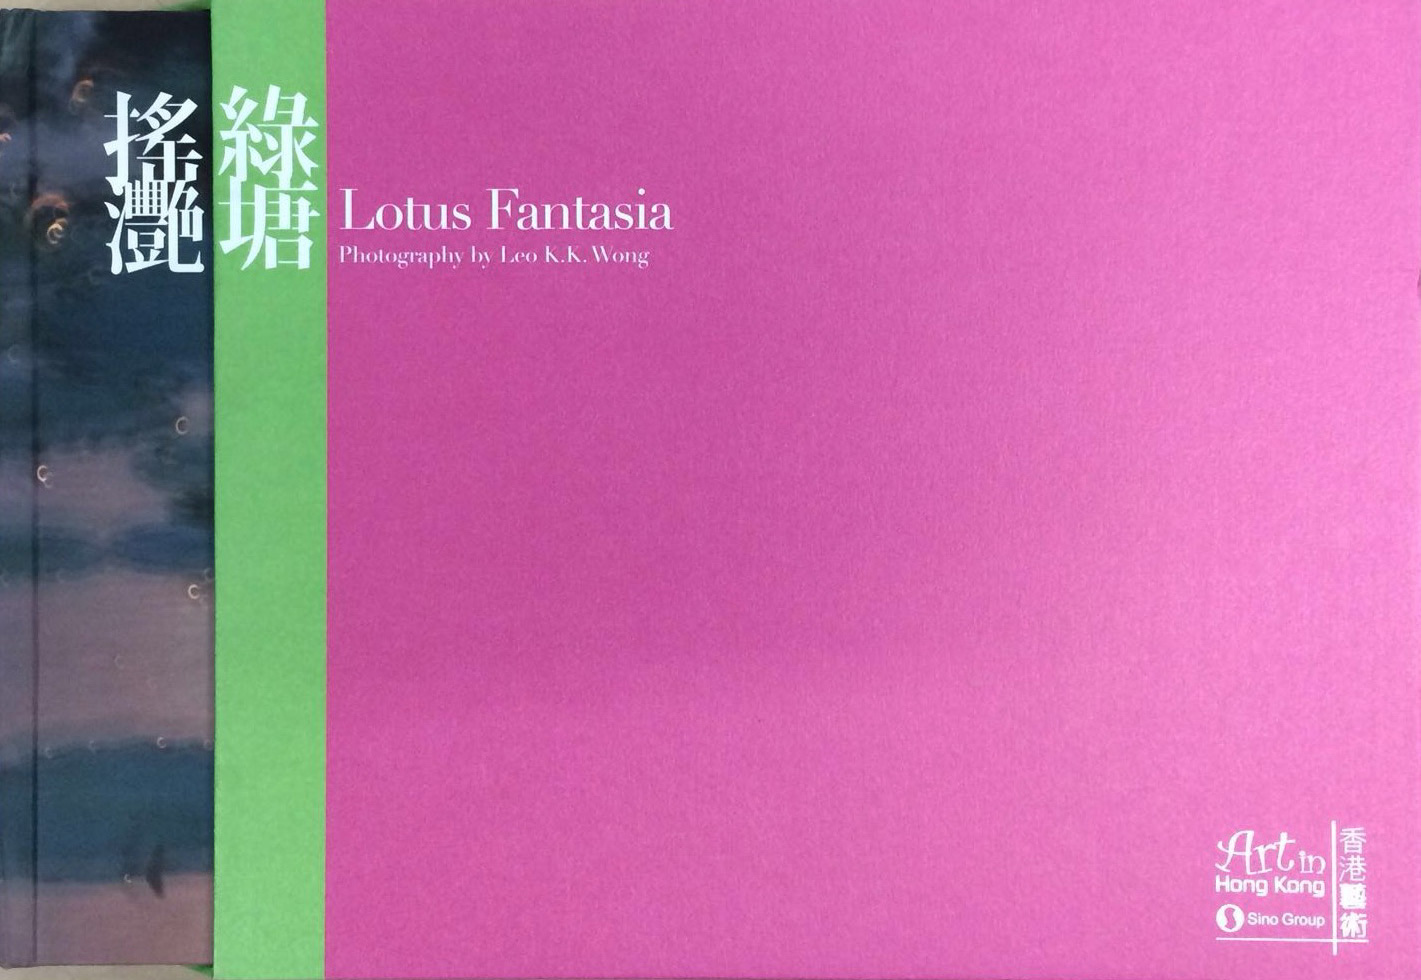 Lotus Fantasia